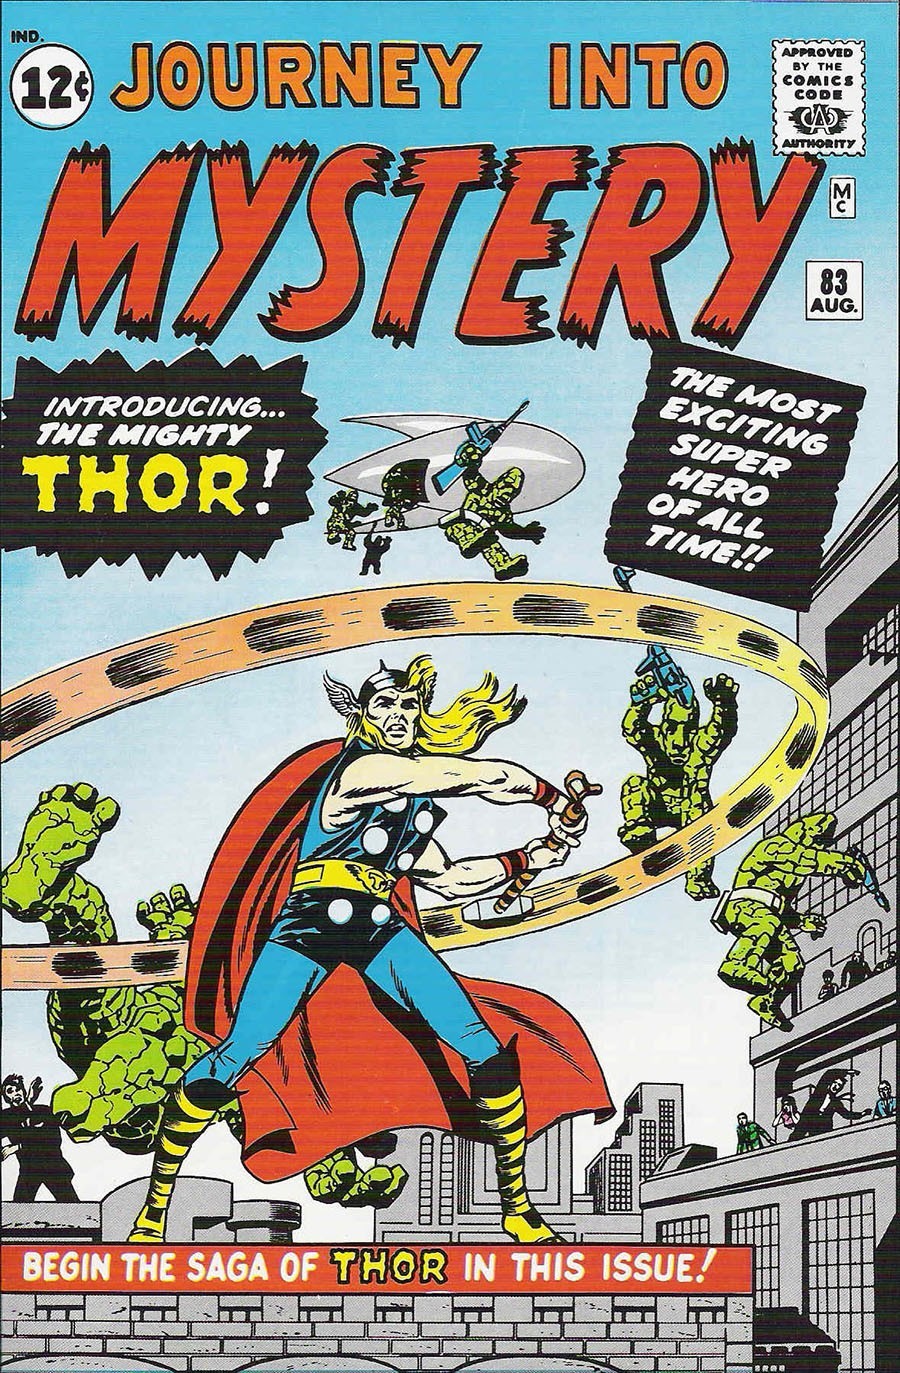 Thor (Journey Into Mystery #83, agosto de 1962)